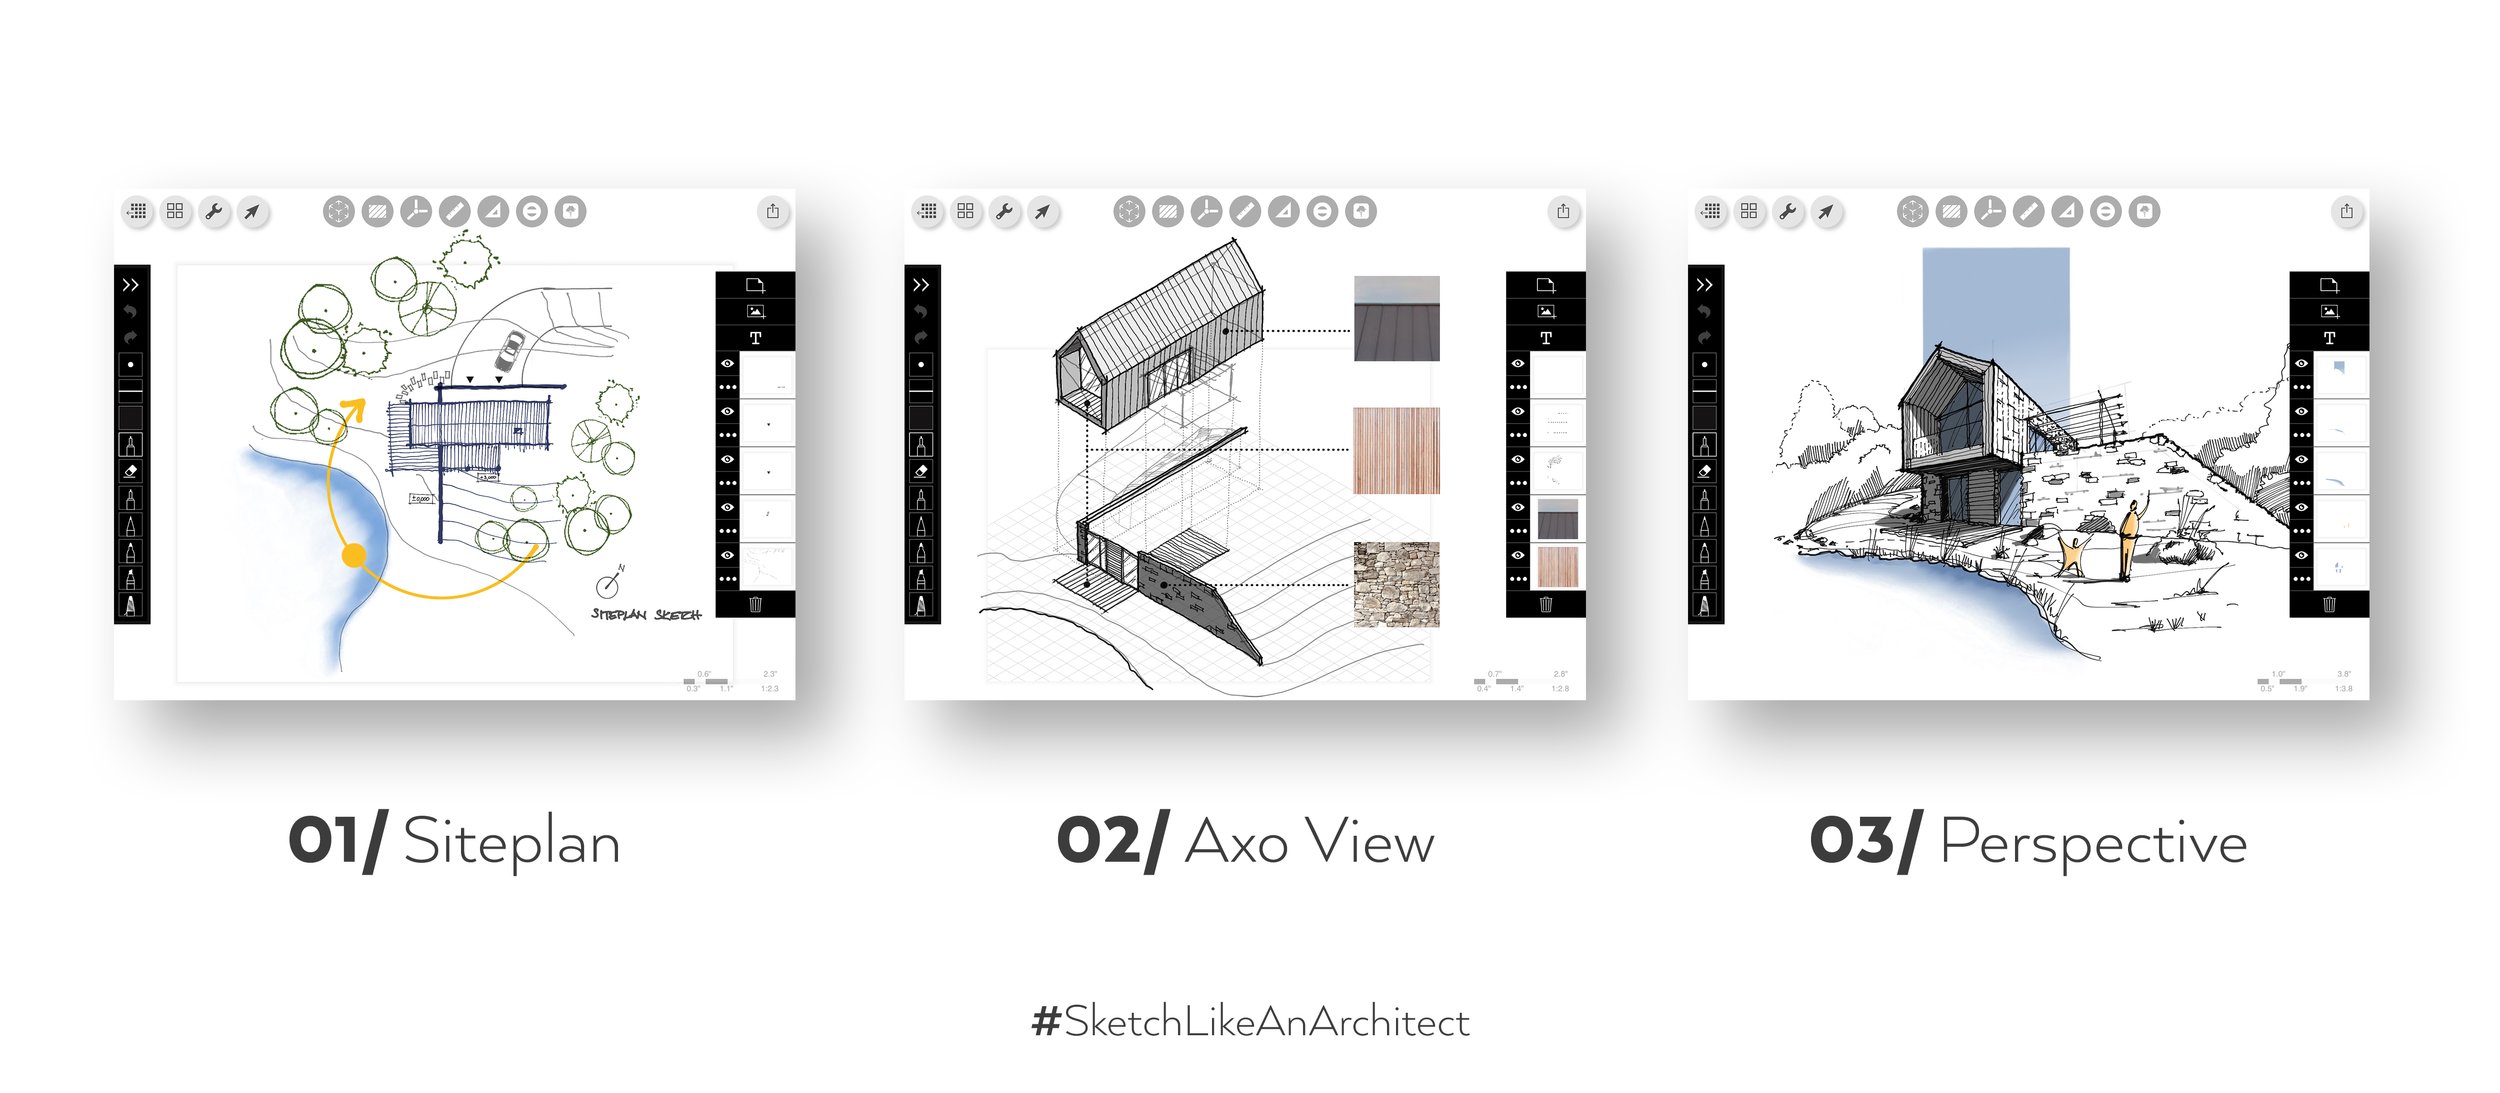 Concept Design Studio  Architecture Sketch Concept Design  Facebook